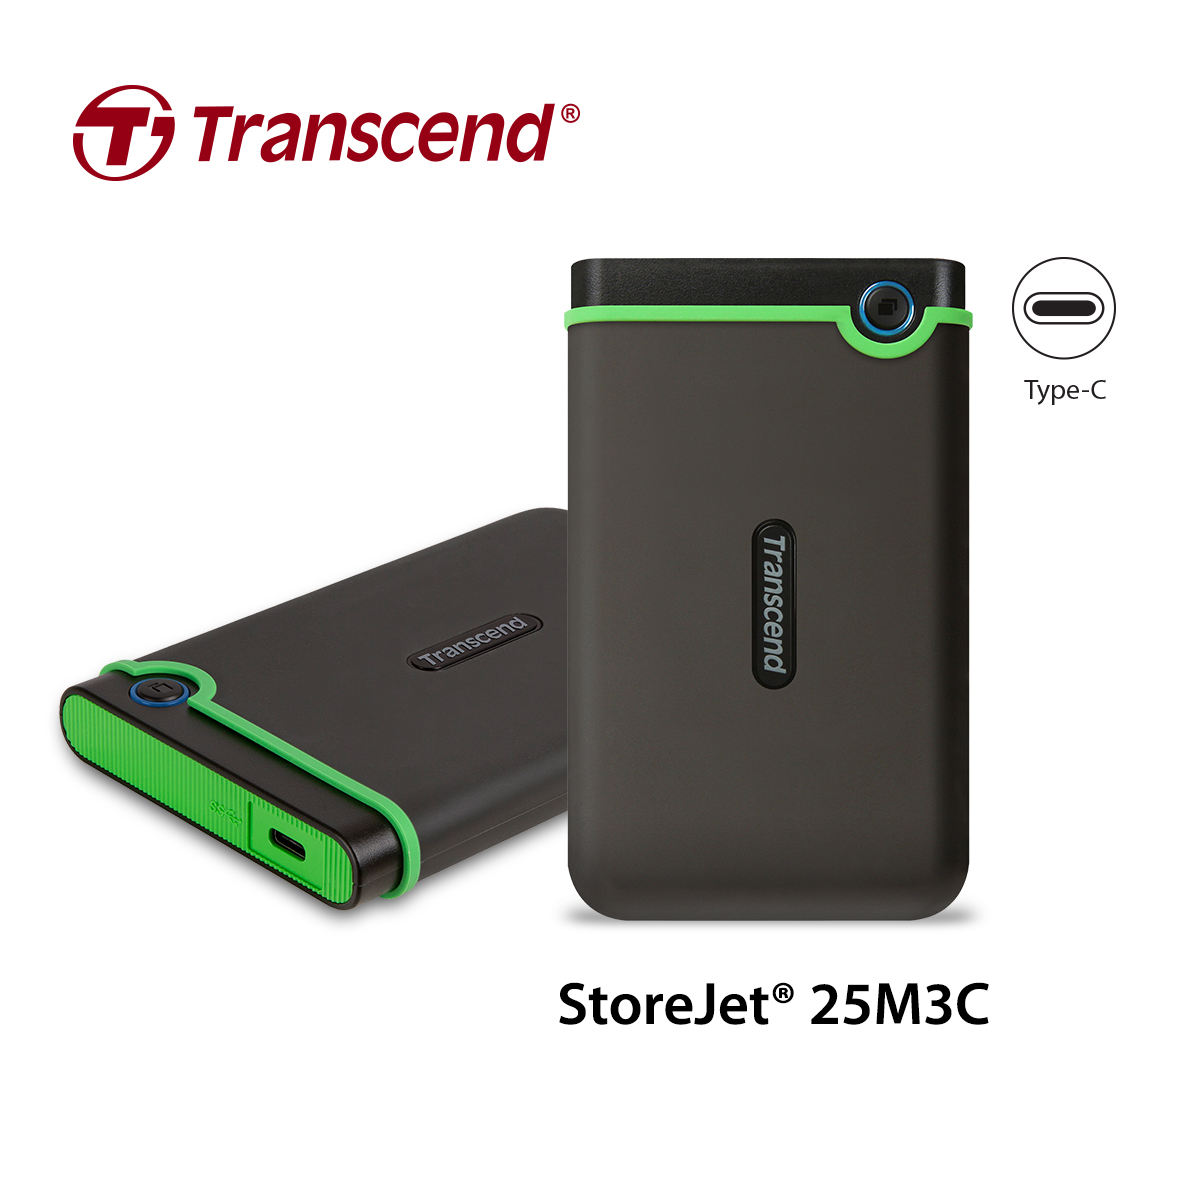 transcend sj25m3c 1 ทรานส์เซนด์ เปิดตัว ฮาร์ดดิสก์แบบพกพาสำหรับงานสมบุกสมบัน รุ่นใหม่ความจุ 2 TB พร้อมอินเทอร์เฟซแบบ USB Type C